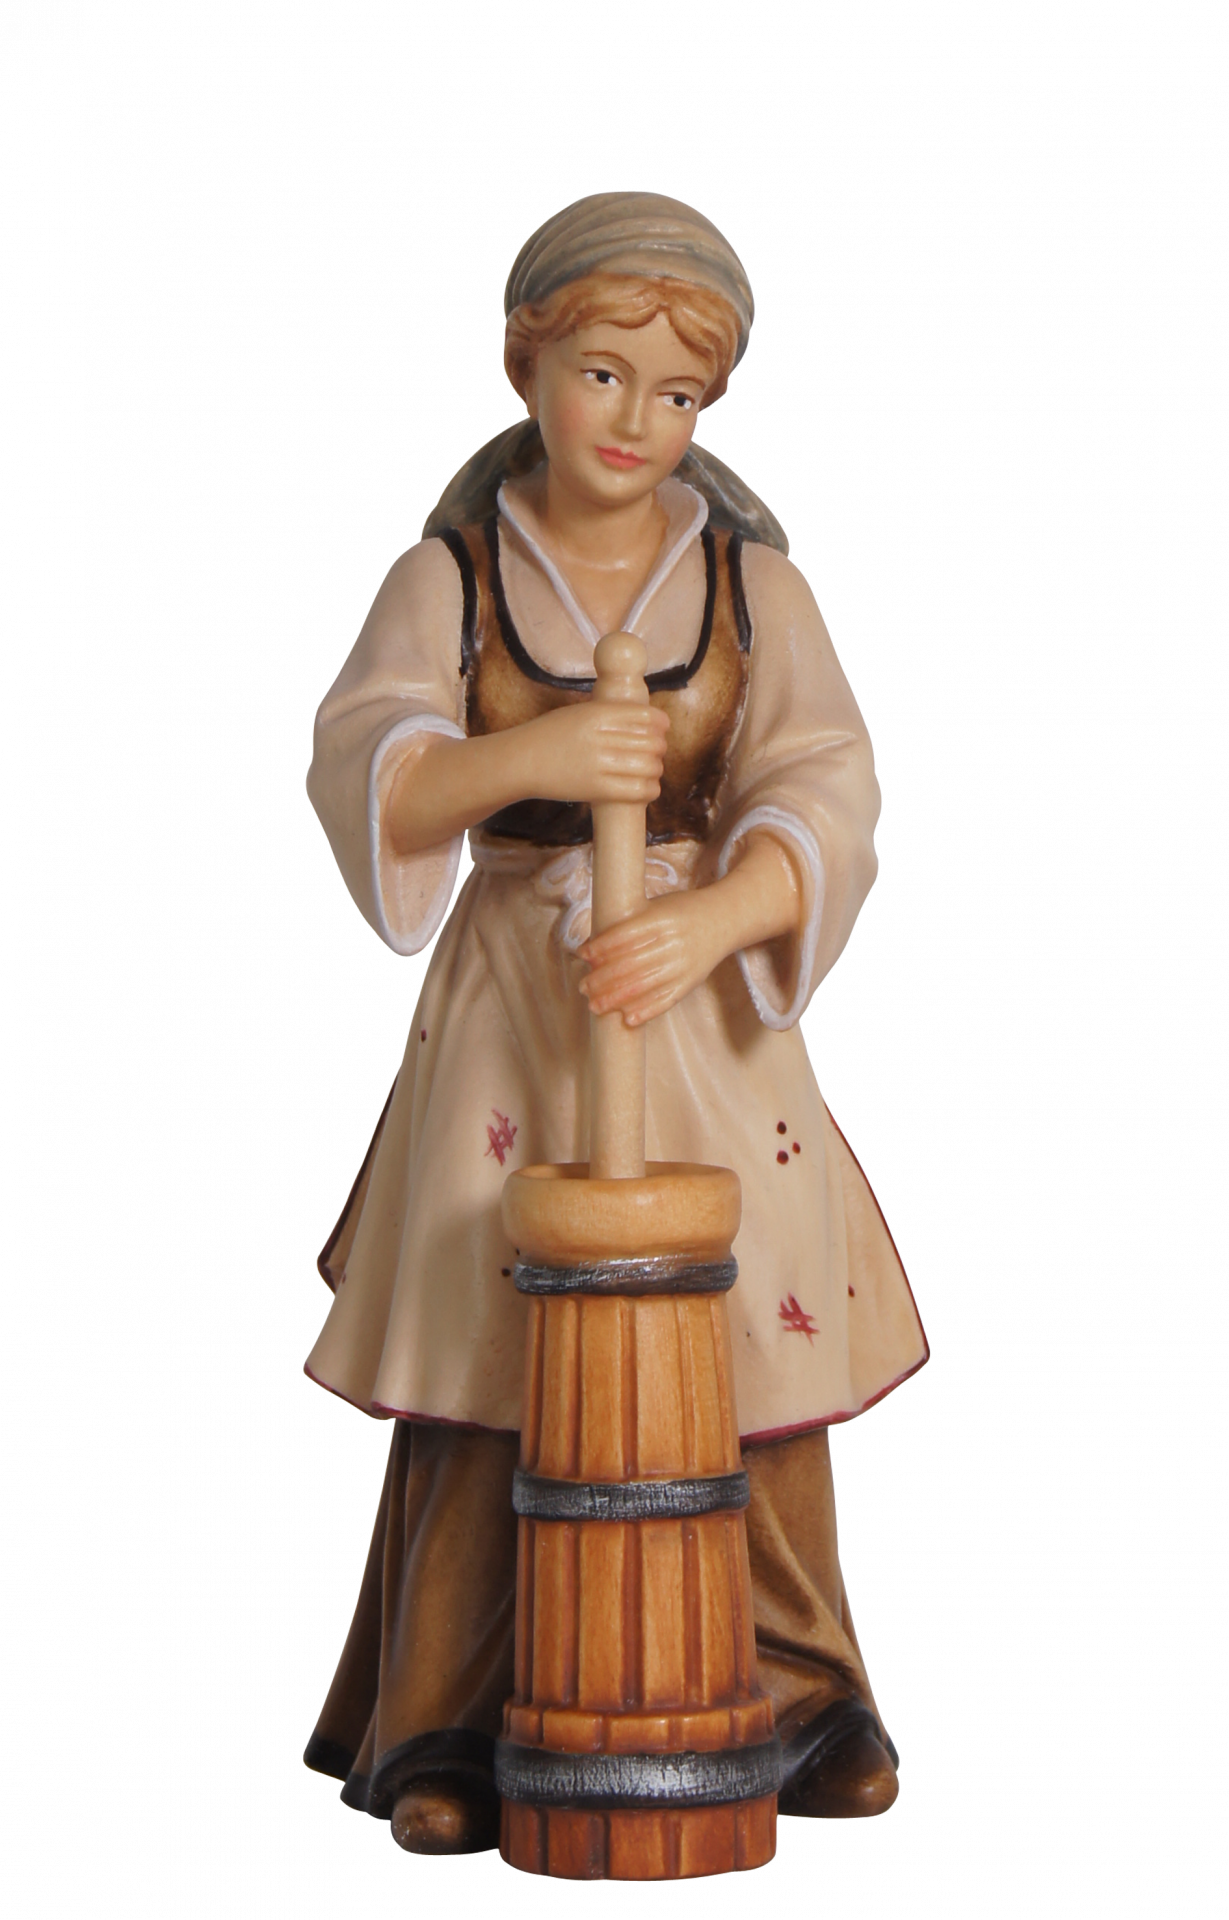 MA Shepherdess with butter churn